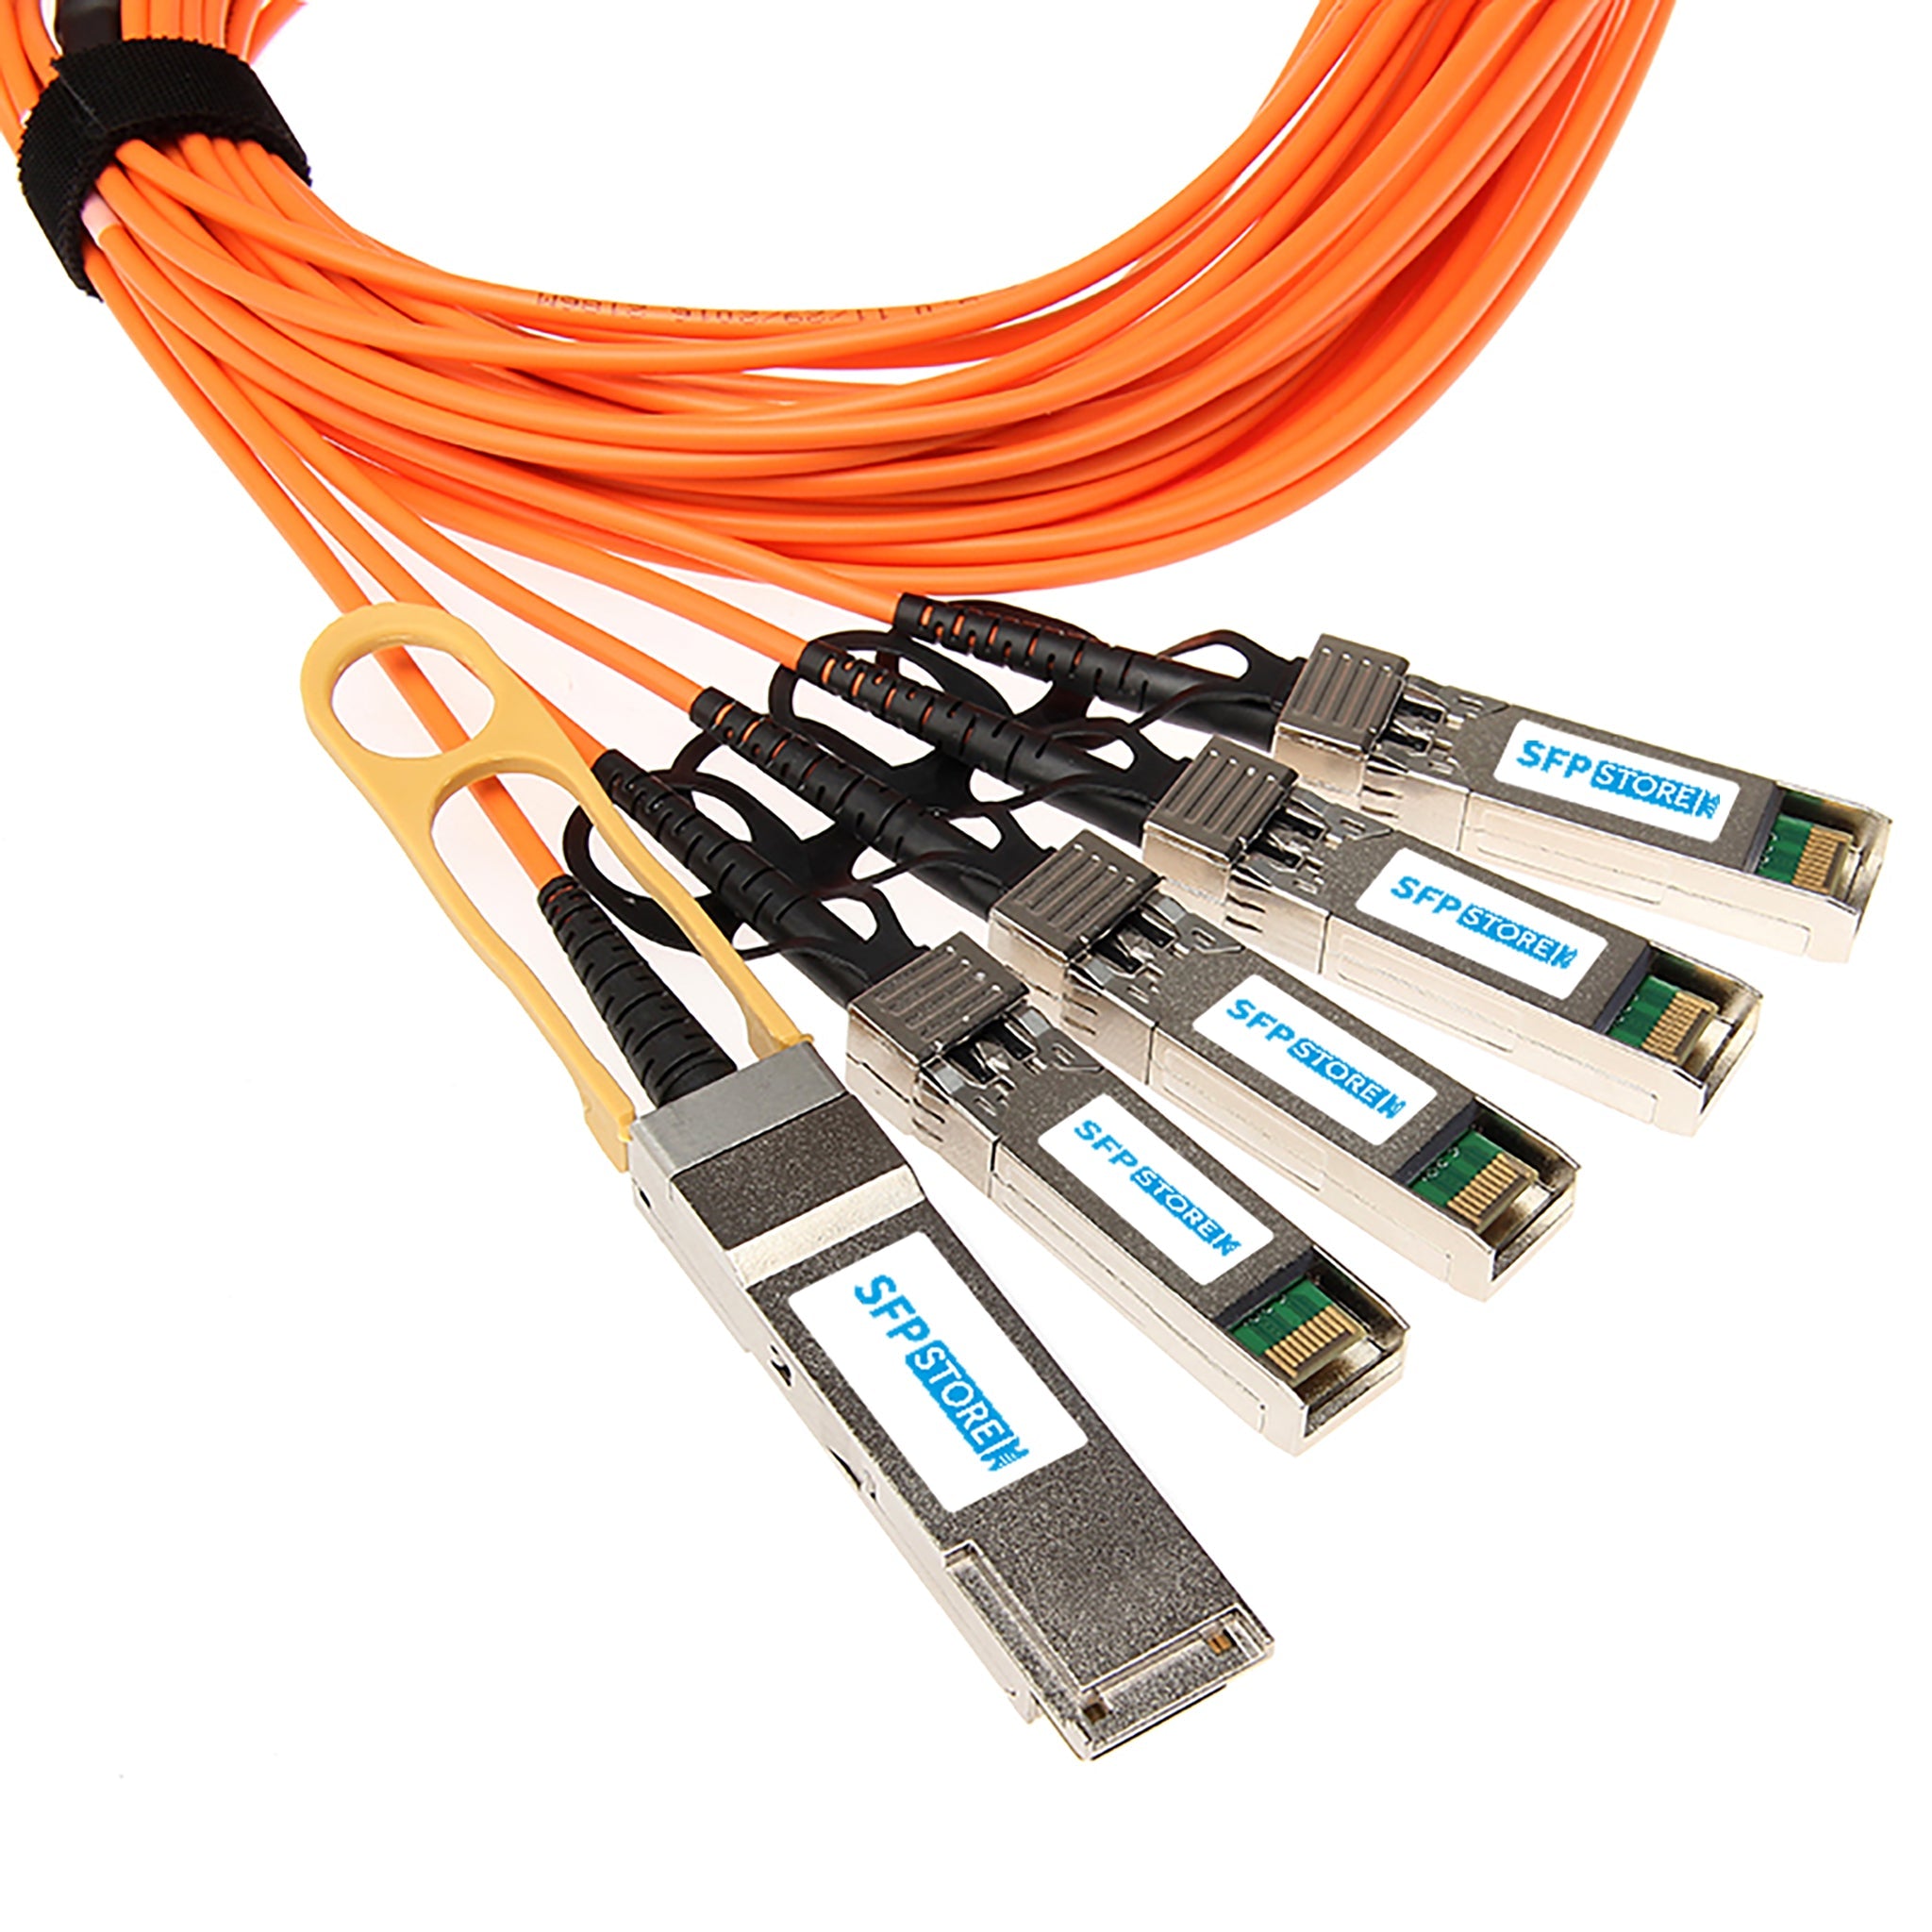 QSFP-4X10G-AOC2M-C - 2m Cisco Compatible 40G QSFP+ to 4 x 10G SFP+ Active Optical Cable